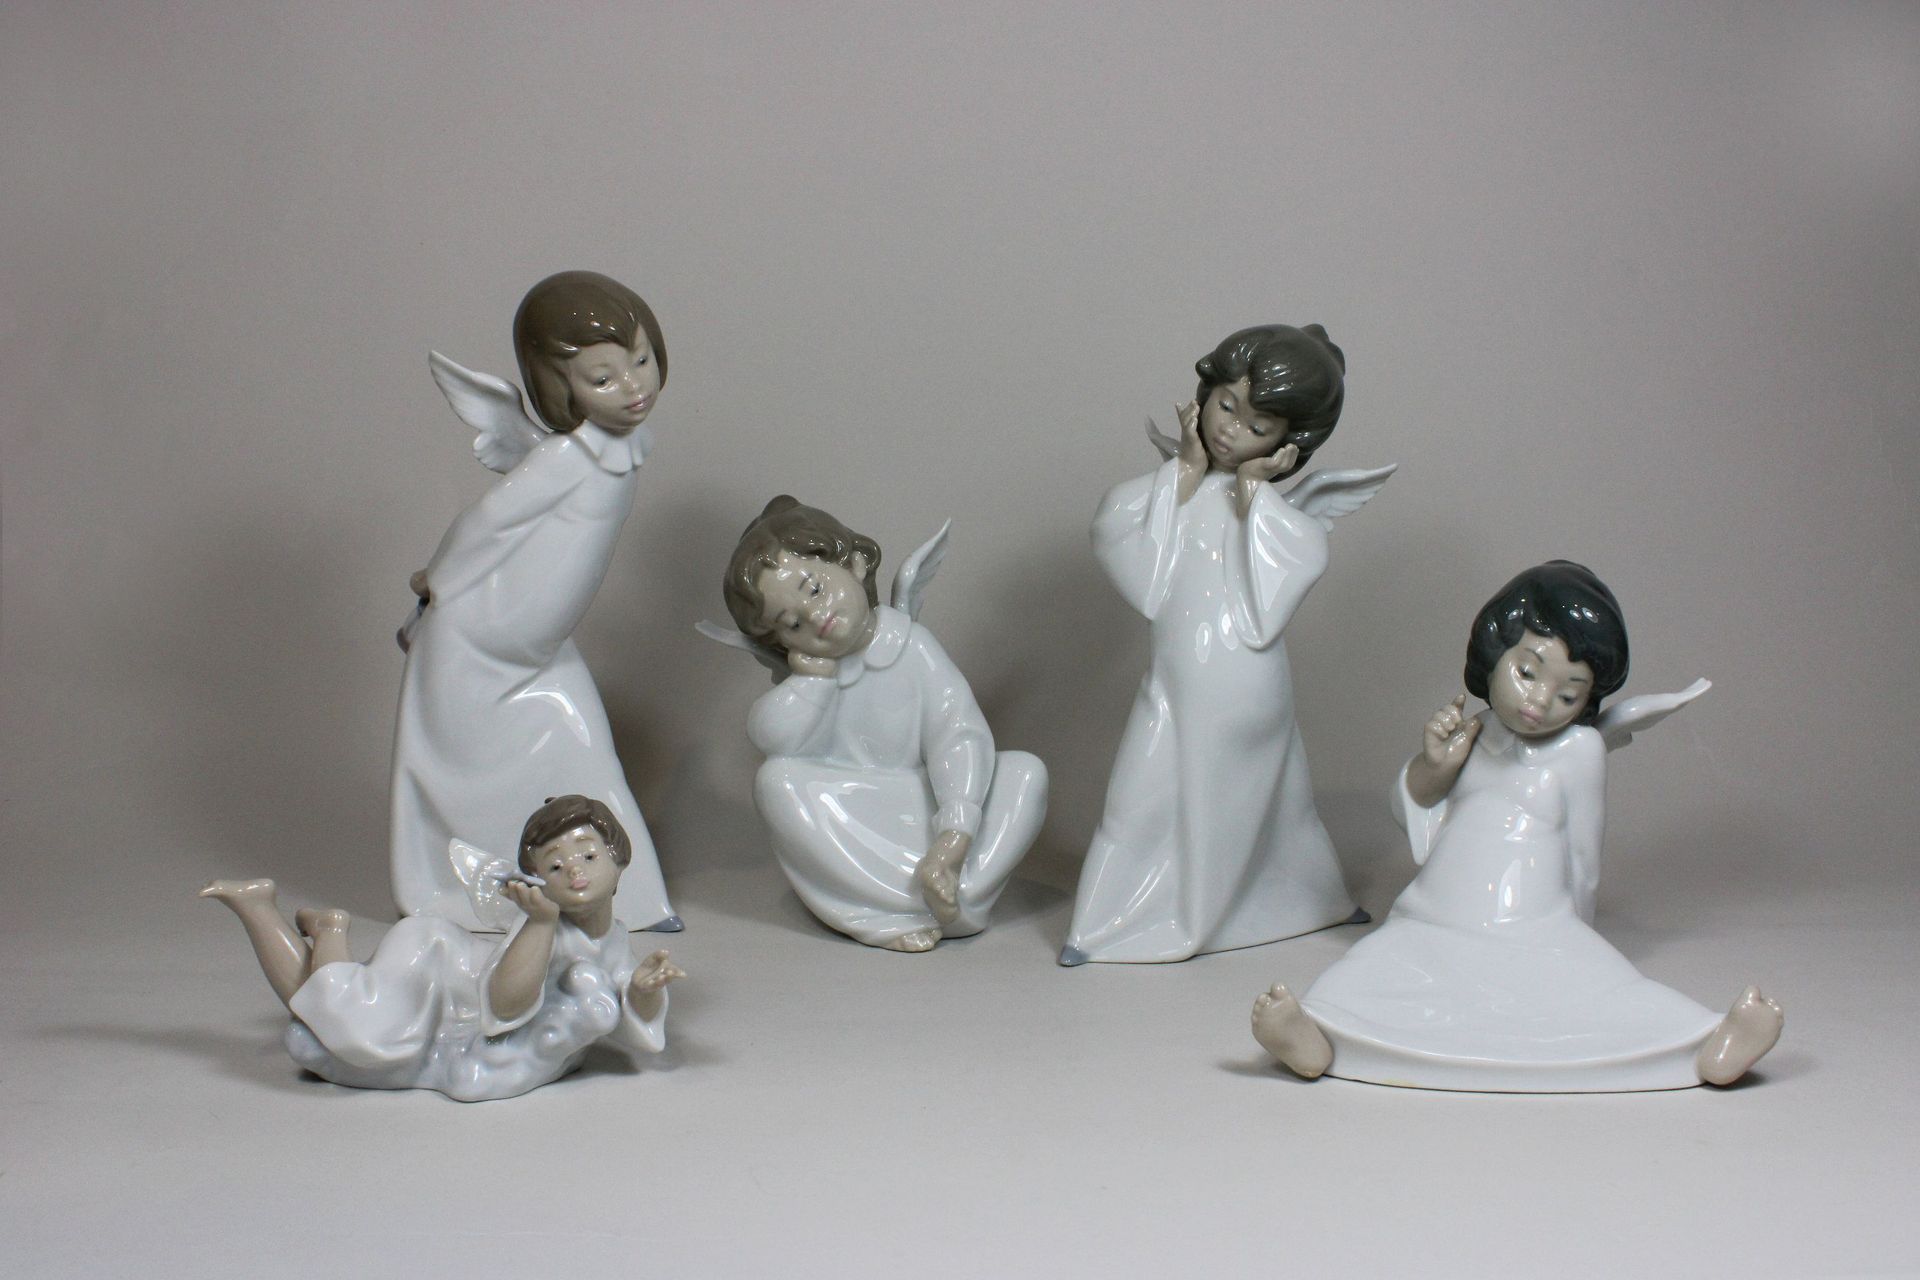 Konvolut Porzellanfiguren. Lladro, Engel Set of porcelain figurines. Lladro, ang&hellip;